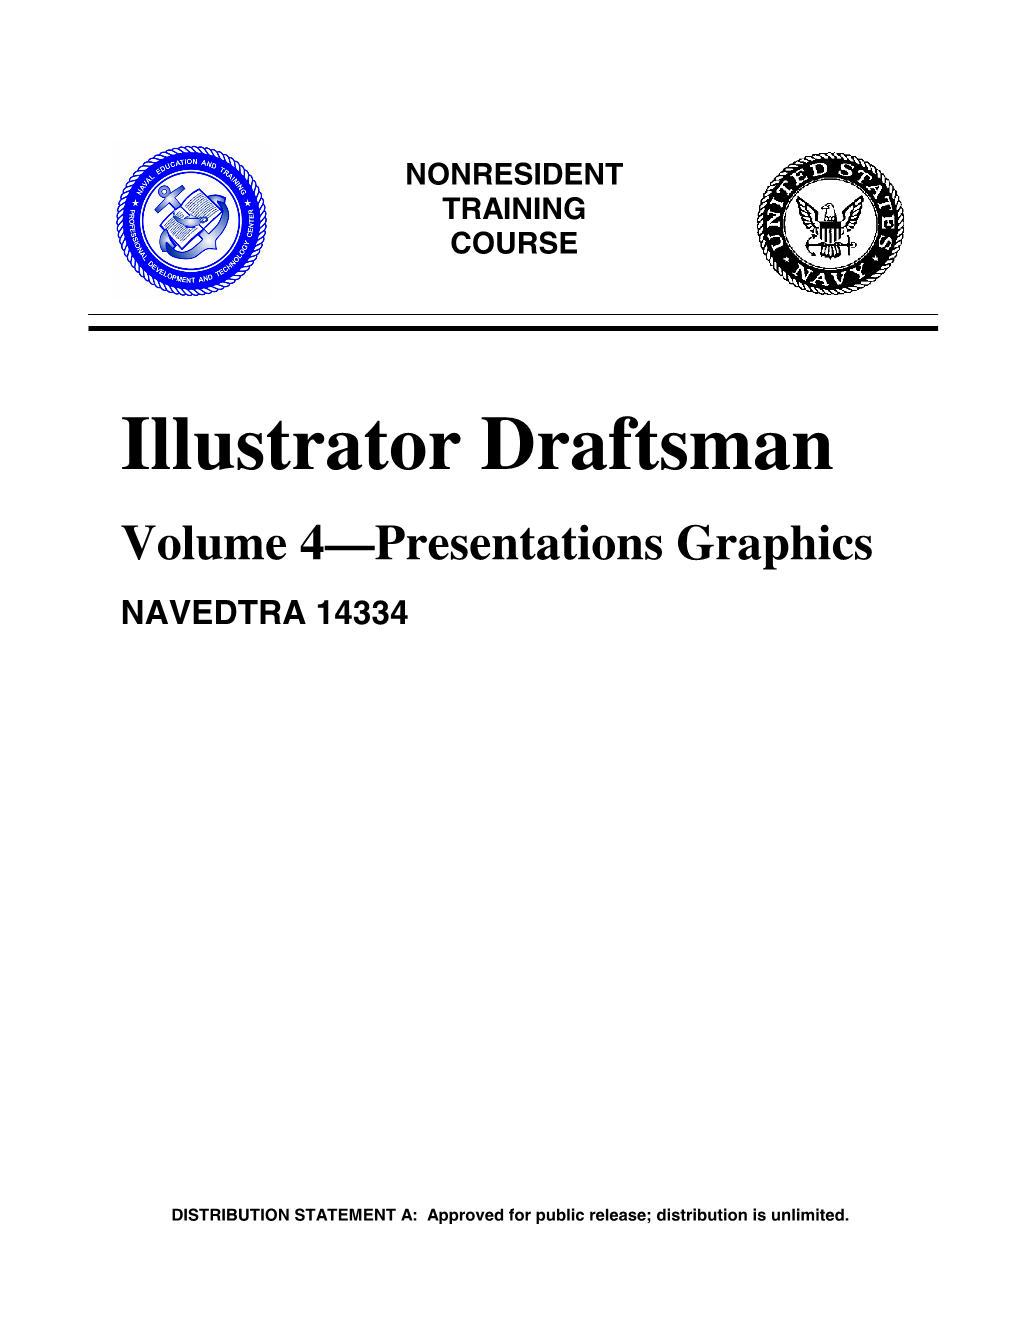 NAVEDTRA 14334 Illustrator Draftsman Volume 4 Presentations Graphics